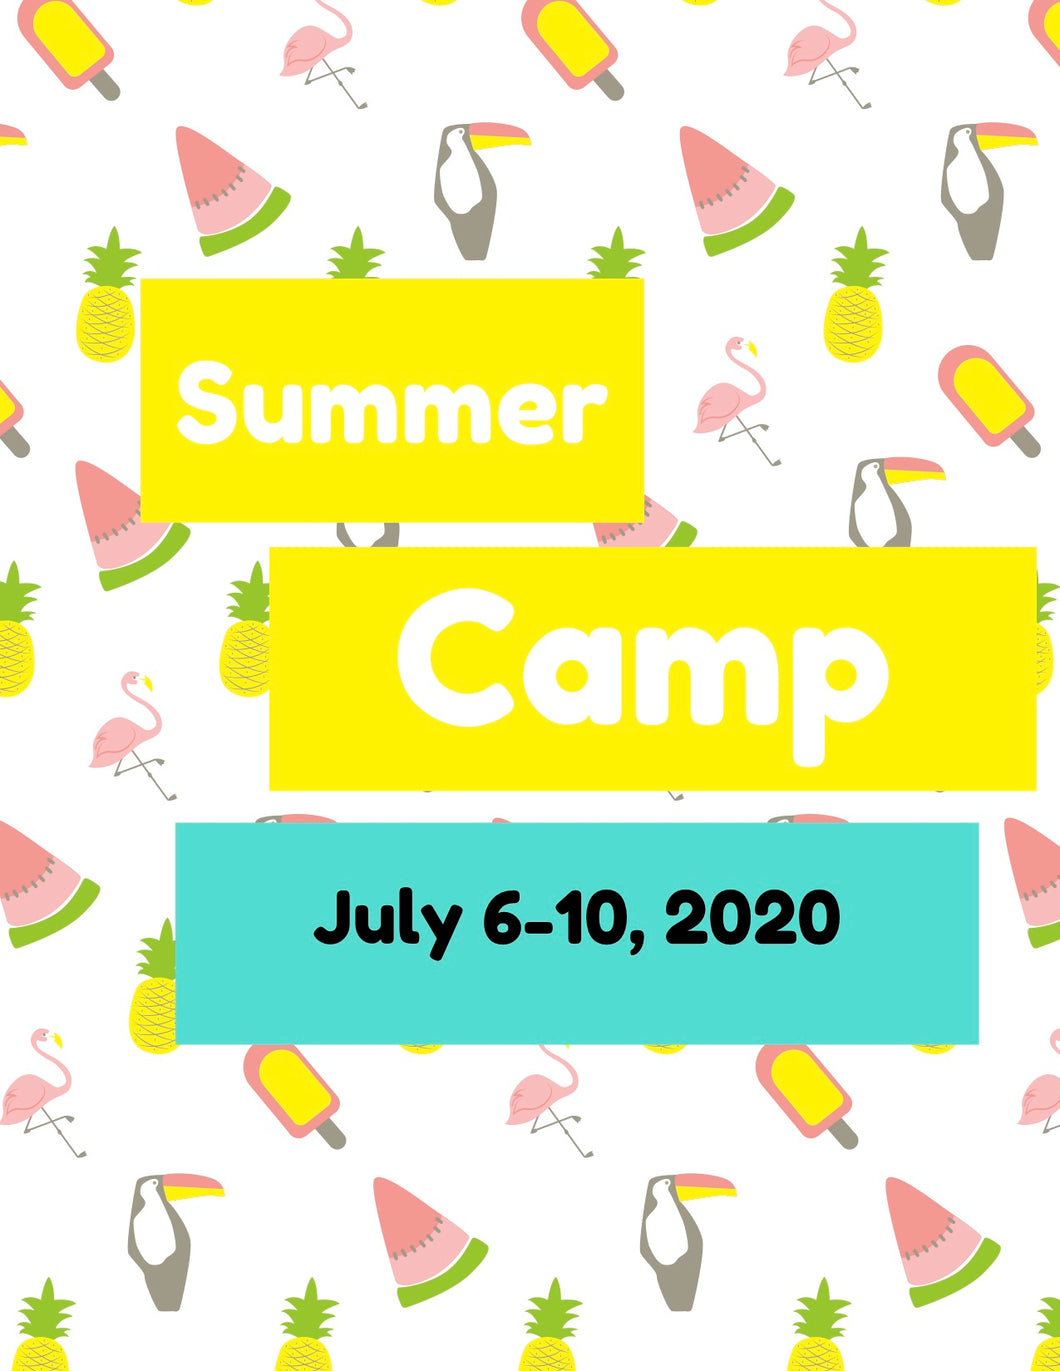 Summer Camp July 6-10, 2020